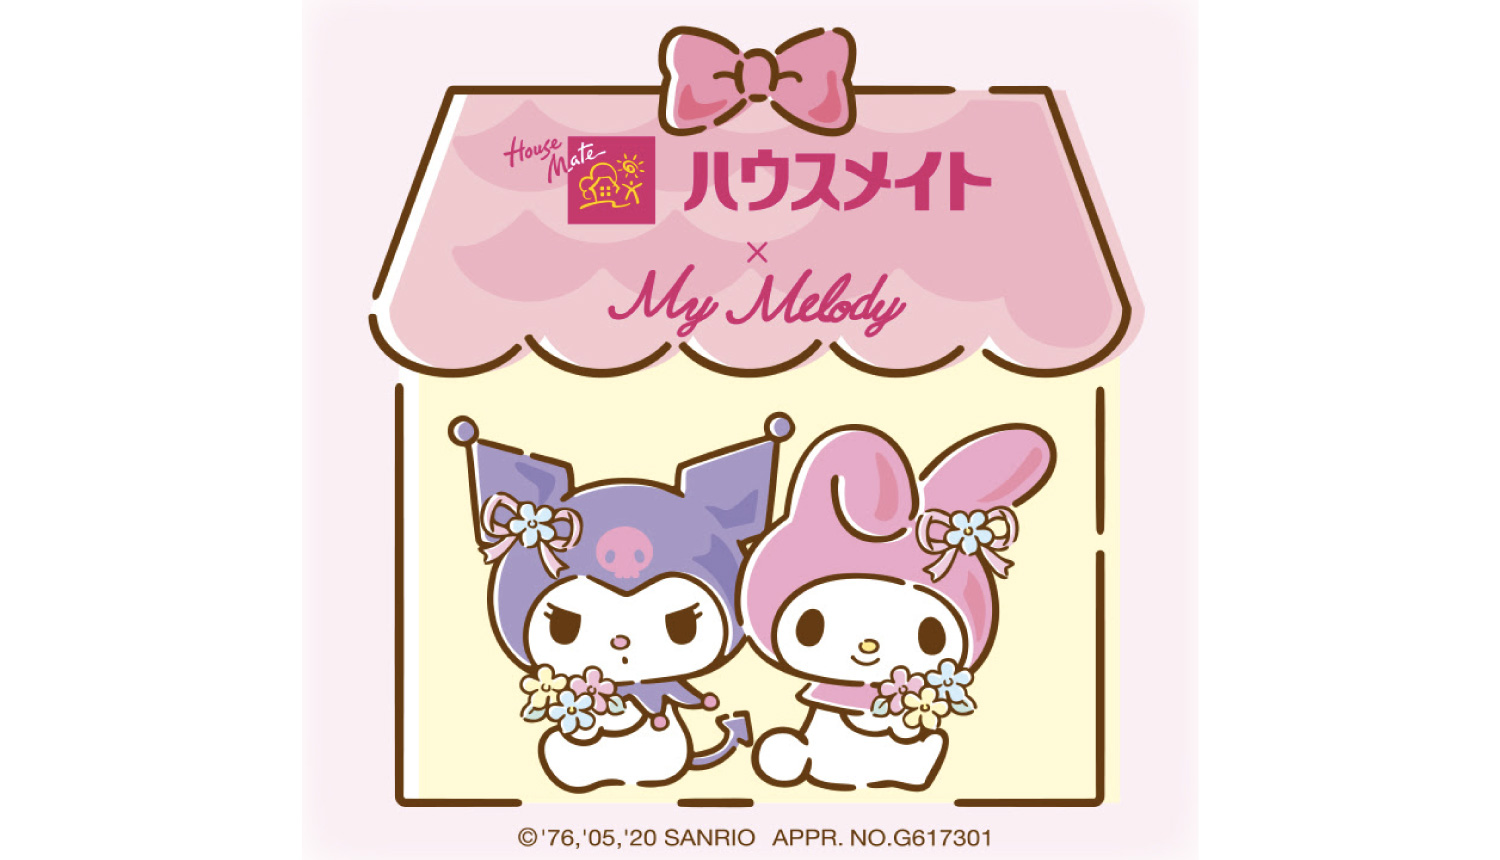 Sanrio Celebrates My Melody's Birthday With Special Merchandise and More. MOSHI MOSHI NIPPON. もしもしにっぽん